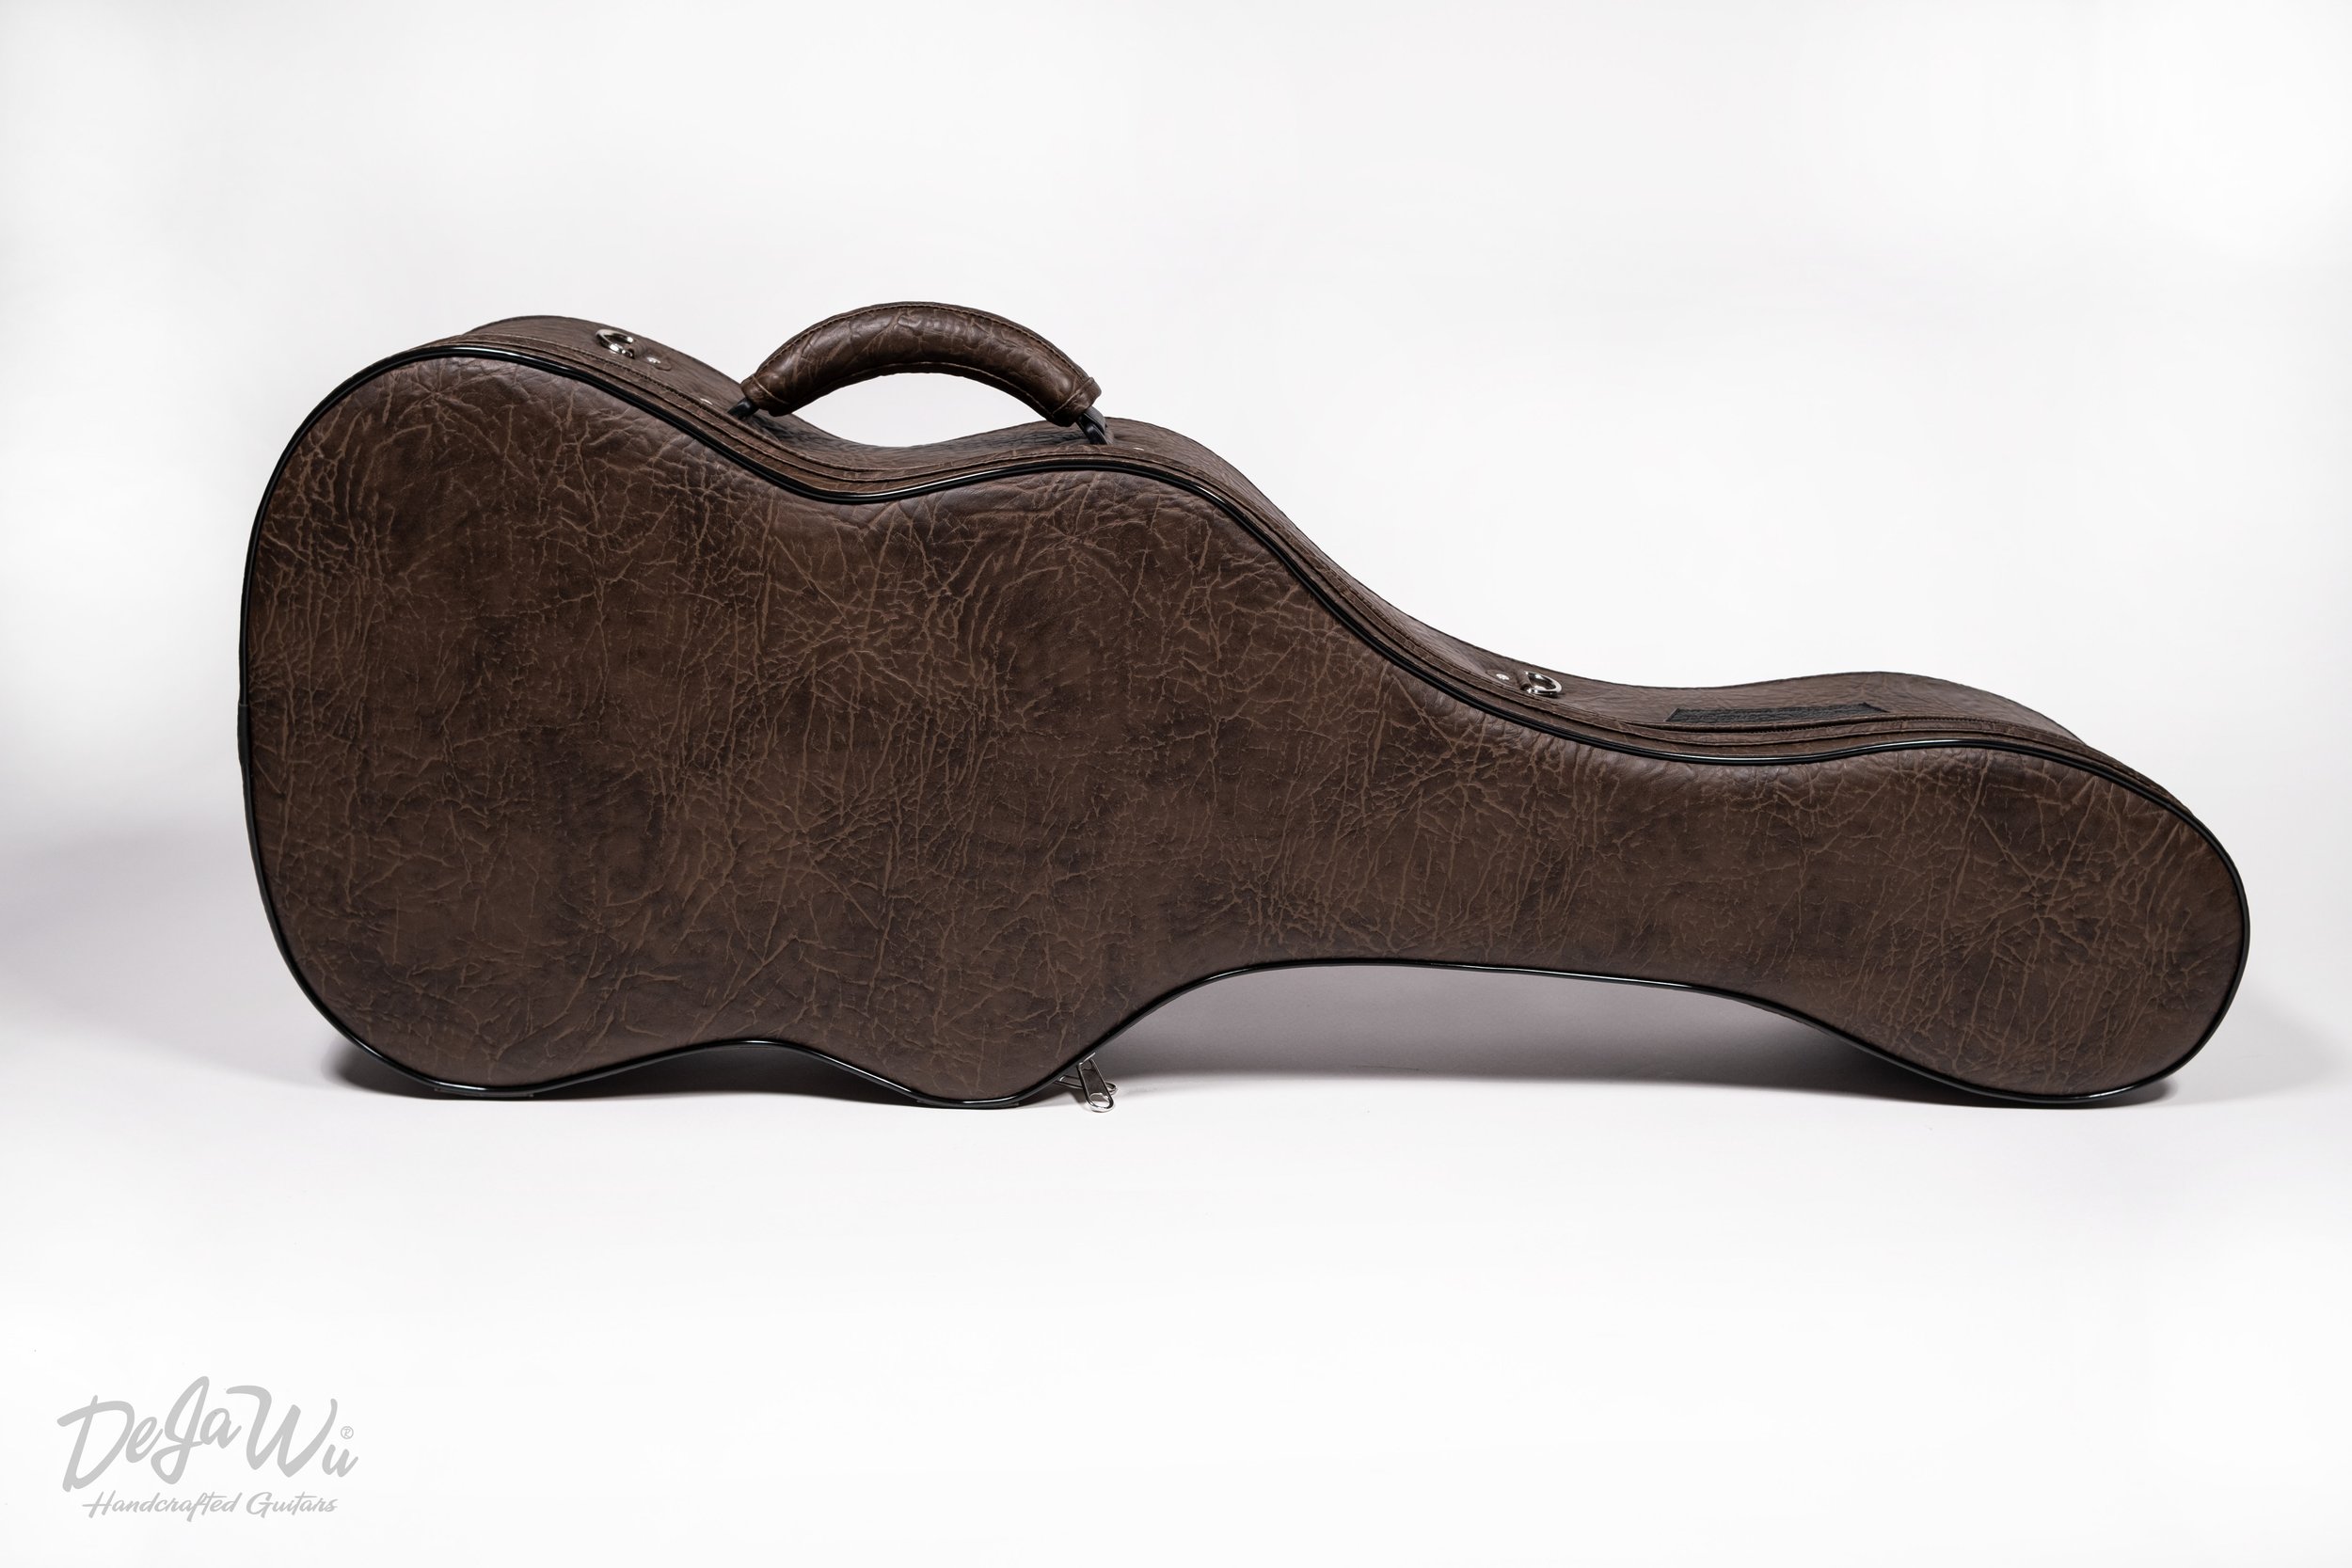 Dejawu Guitars - Custom hand made guitar case by Artur Benedykt from Poland.